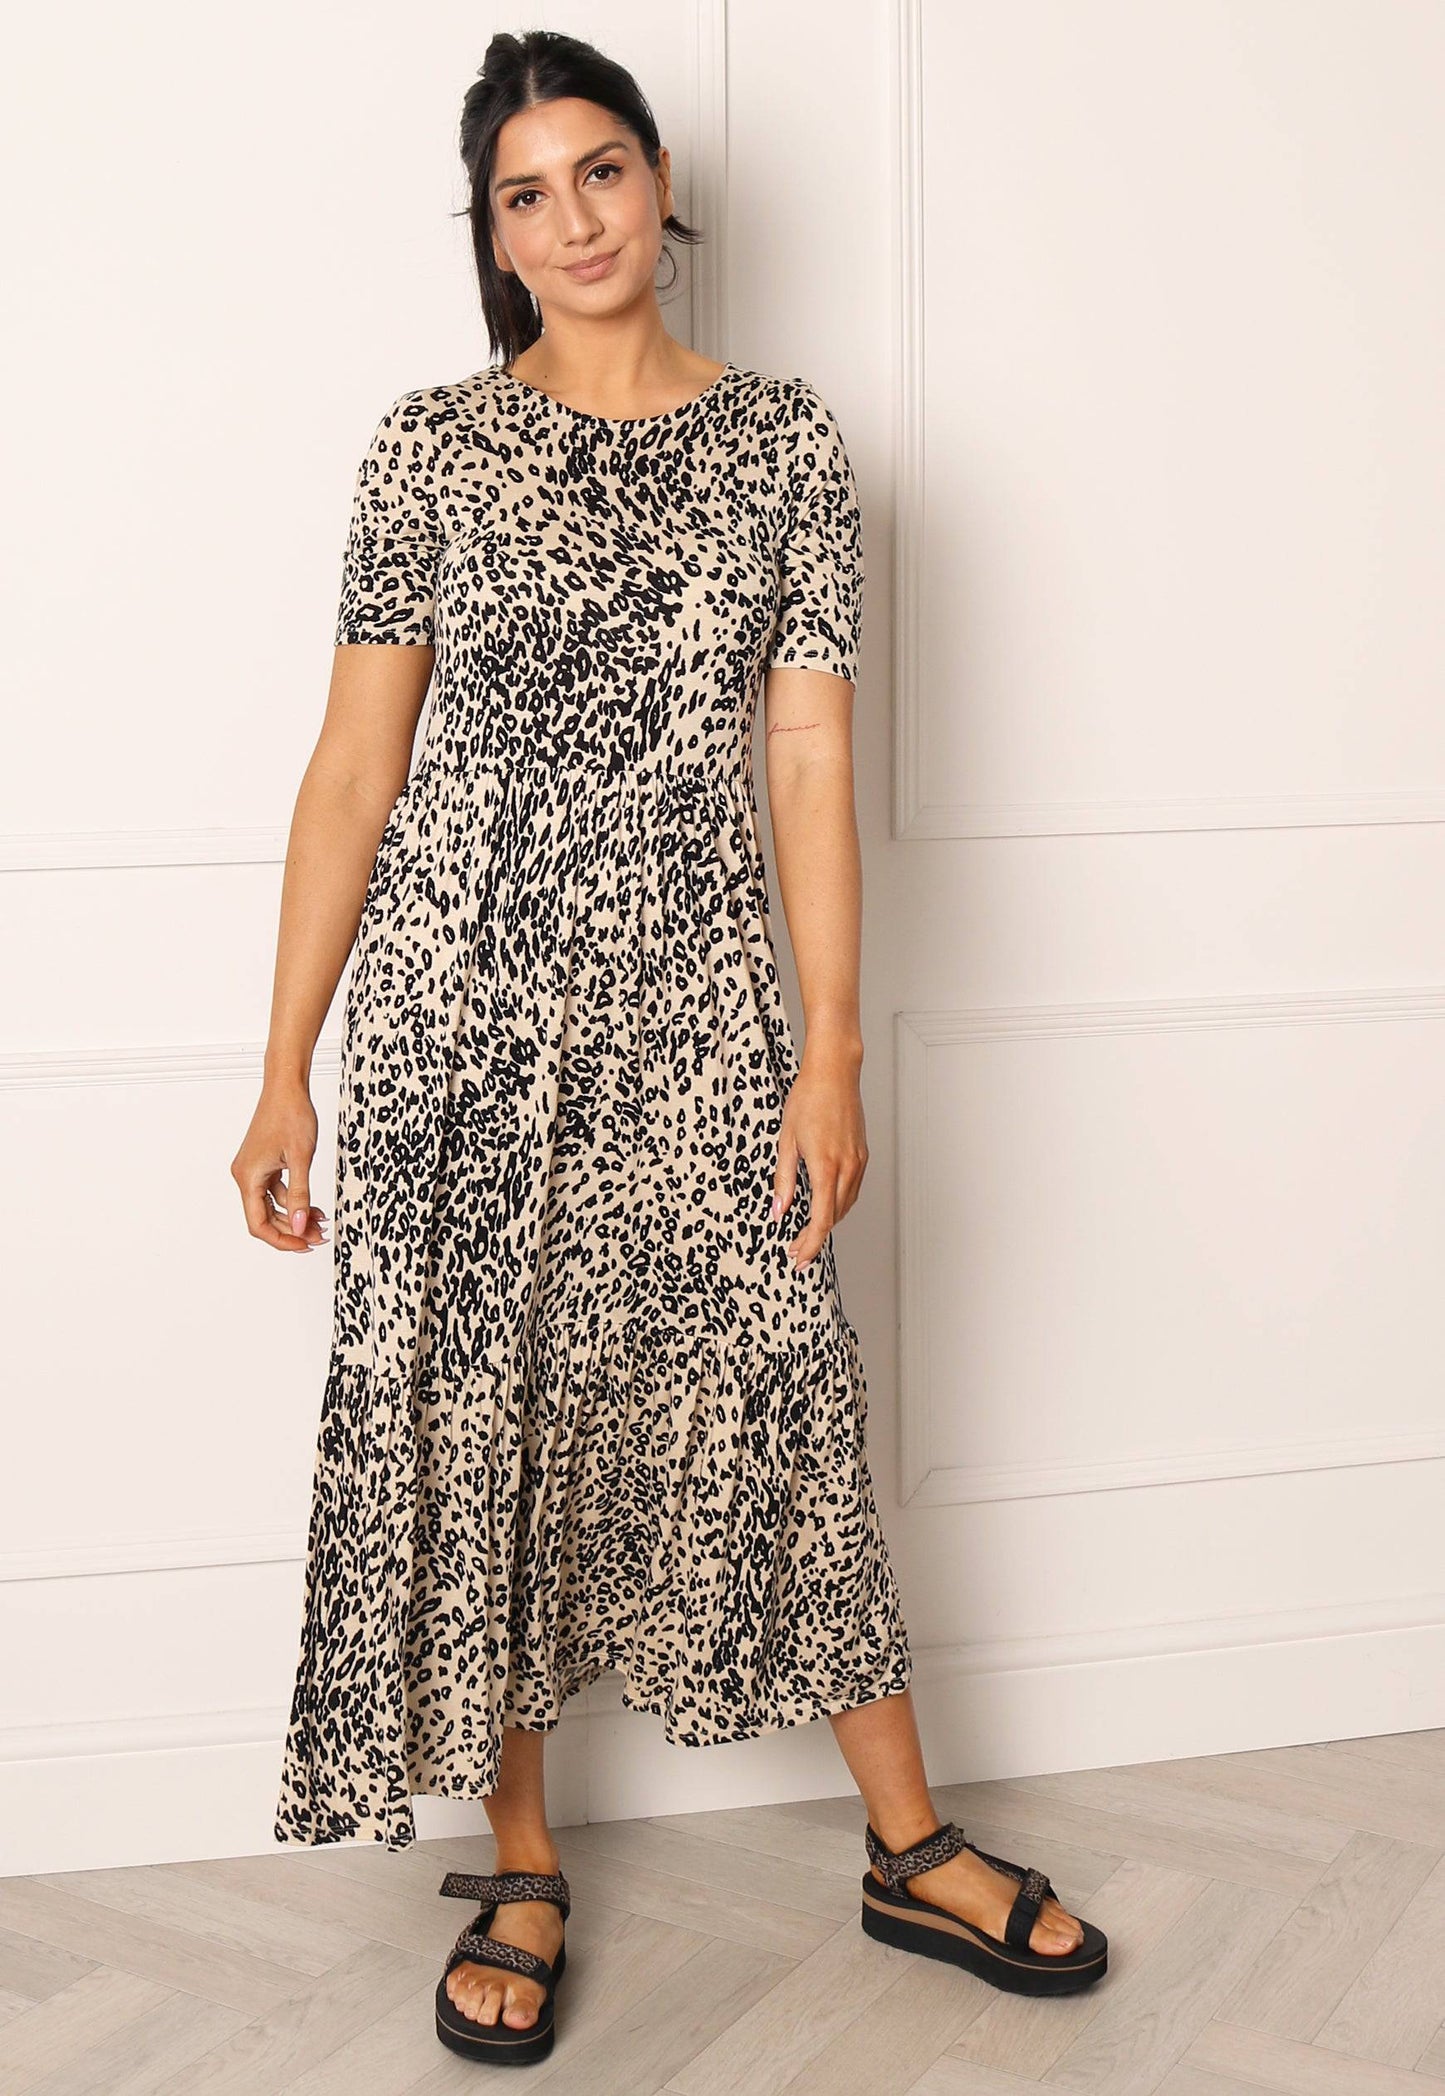 VERO MODA Mitsi Leopard Print Tiered Jersey Midi Summer Dress in Beige & Black - One Nation Clothing